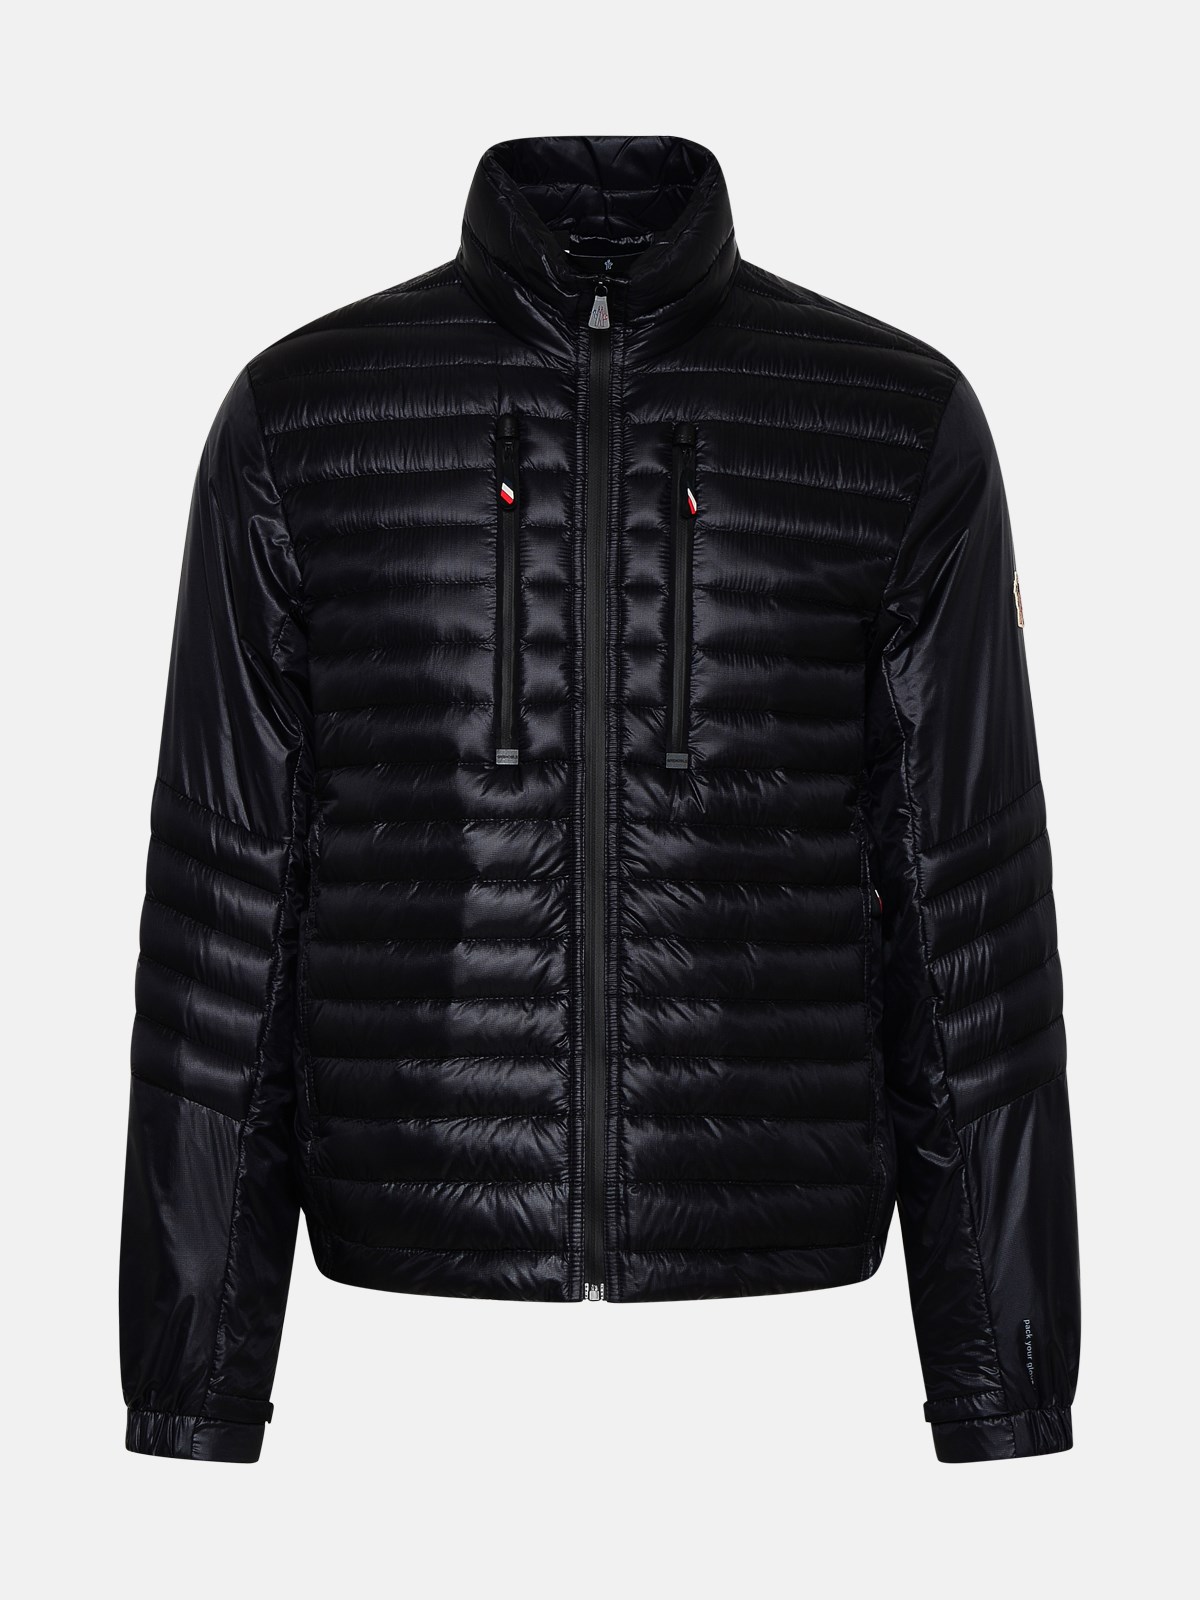 Moncler Grenoble Al Cashmere Black Nylon Puffer Jacket